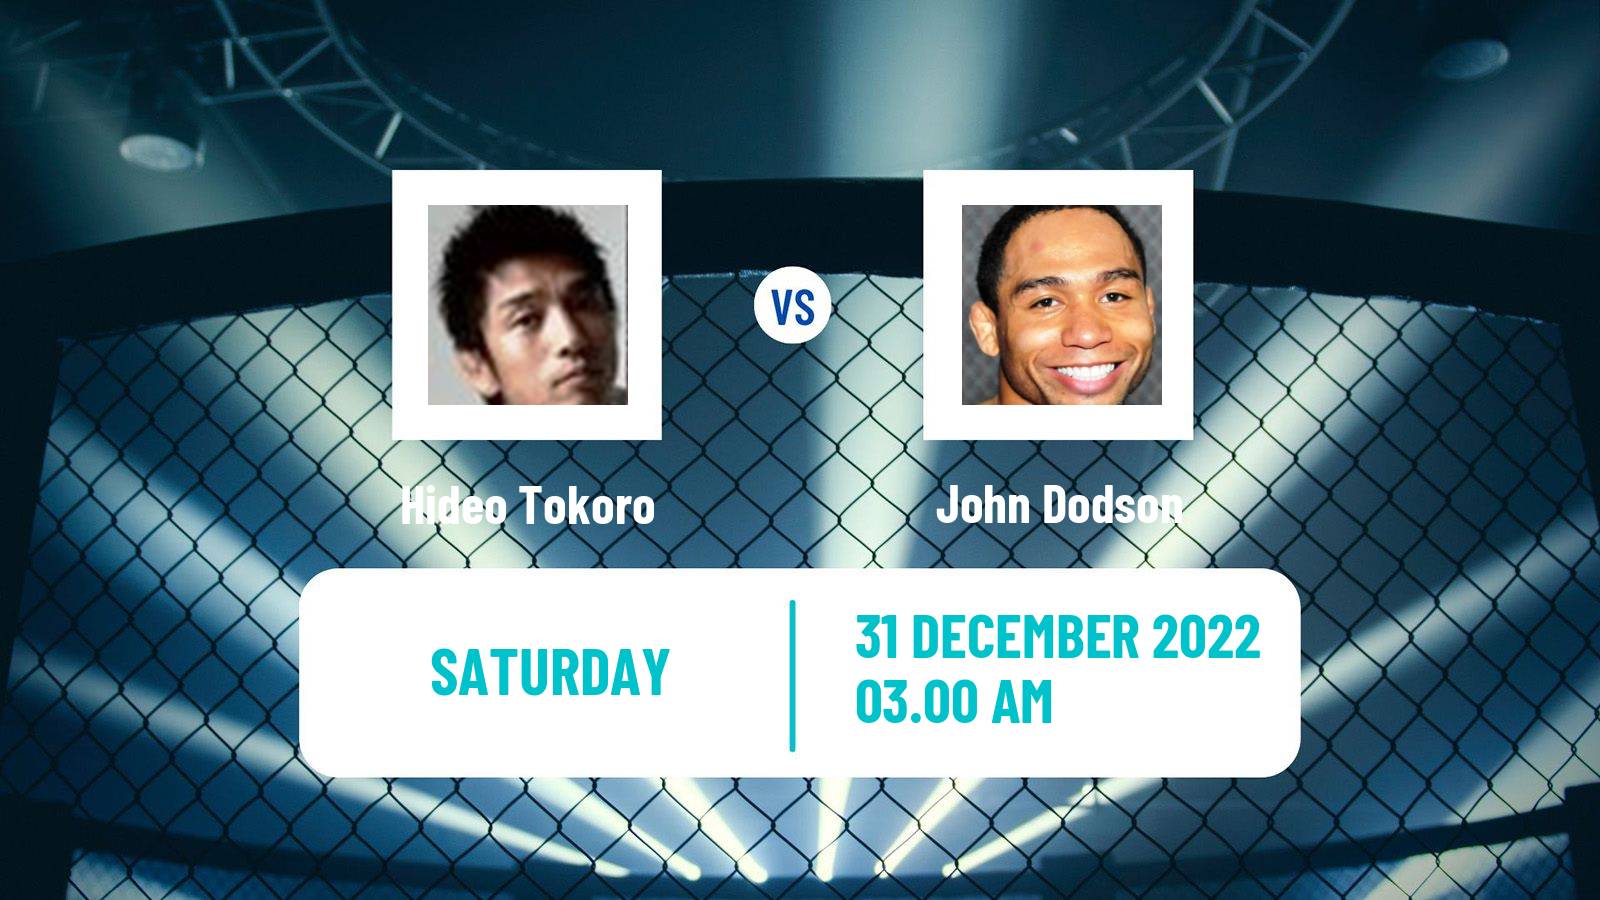 MMA MMA Hideo Tokoro - John Dodson